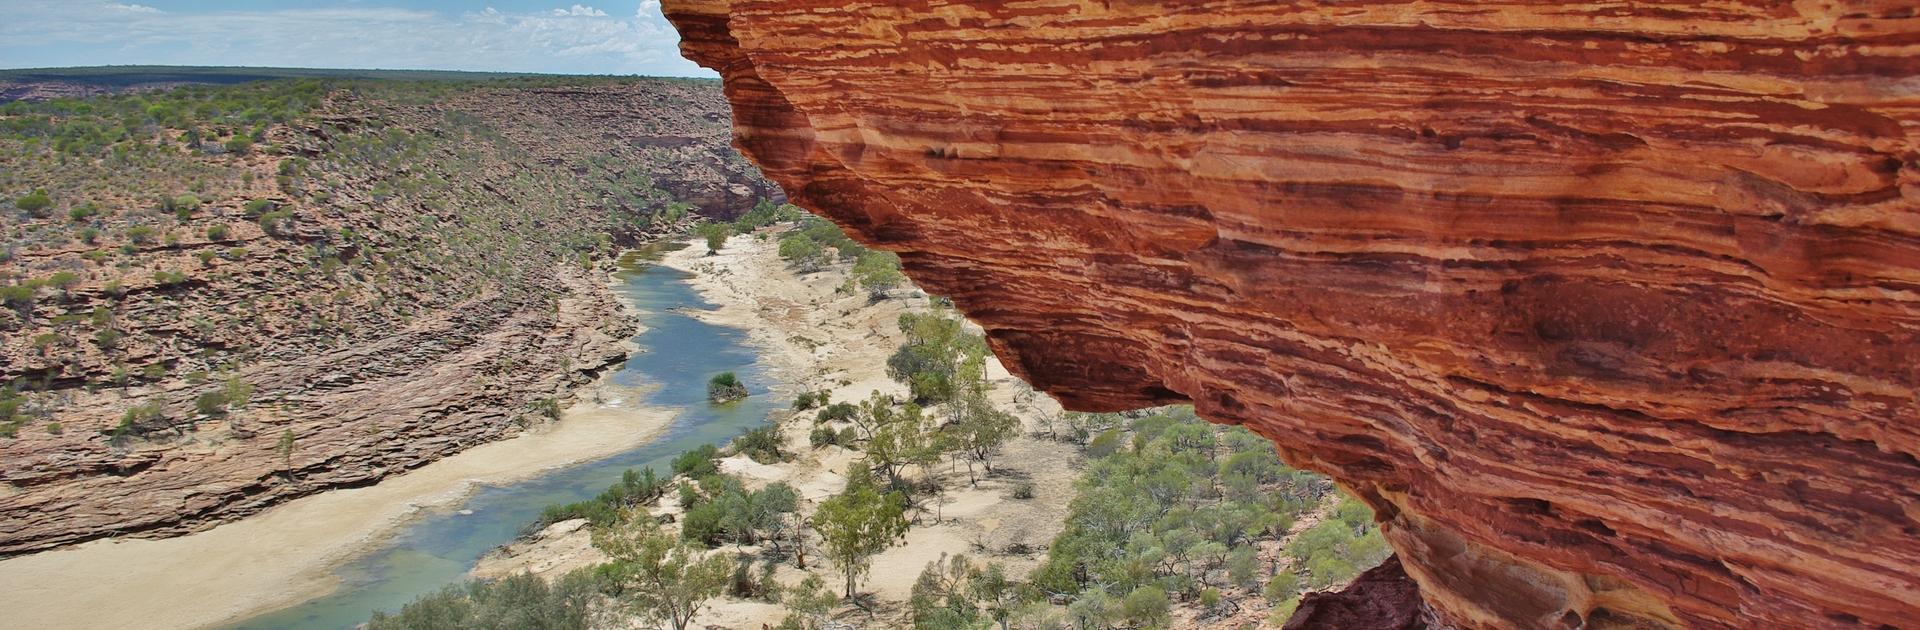 Ferruginous sandstone, Australia